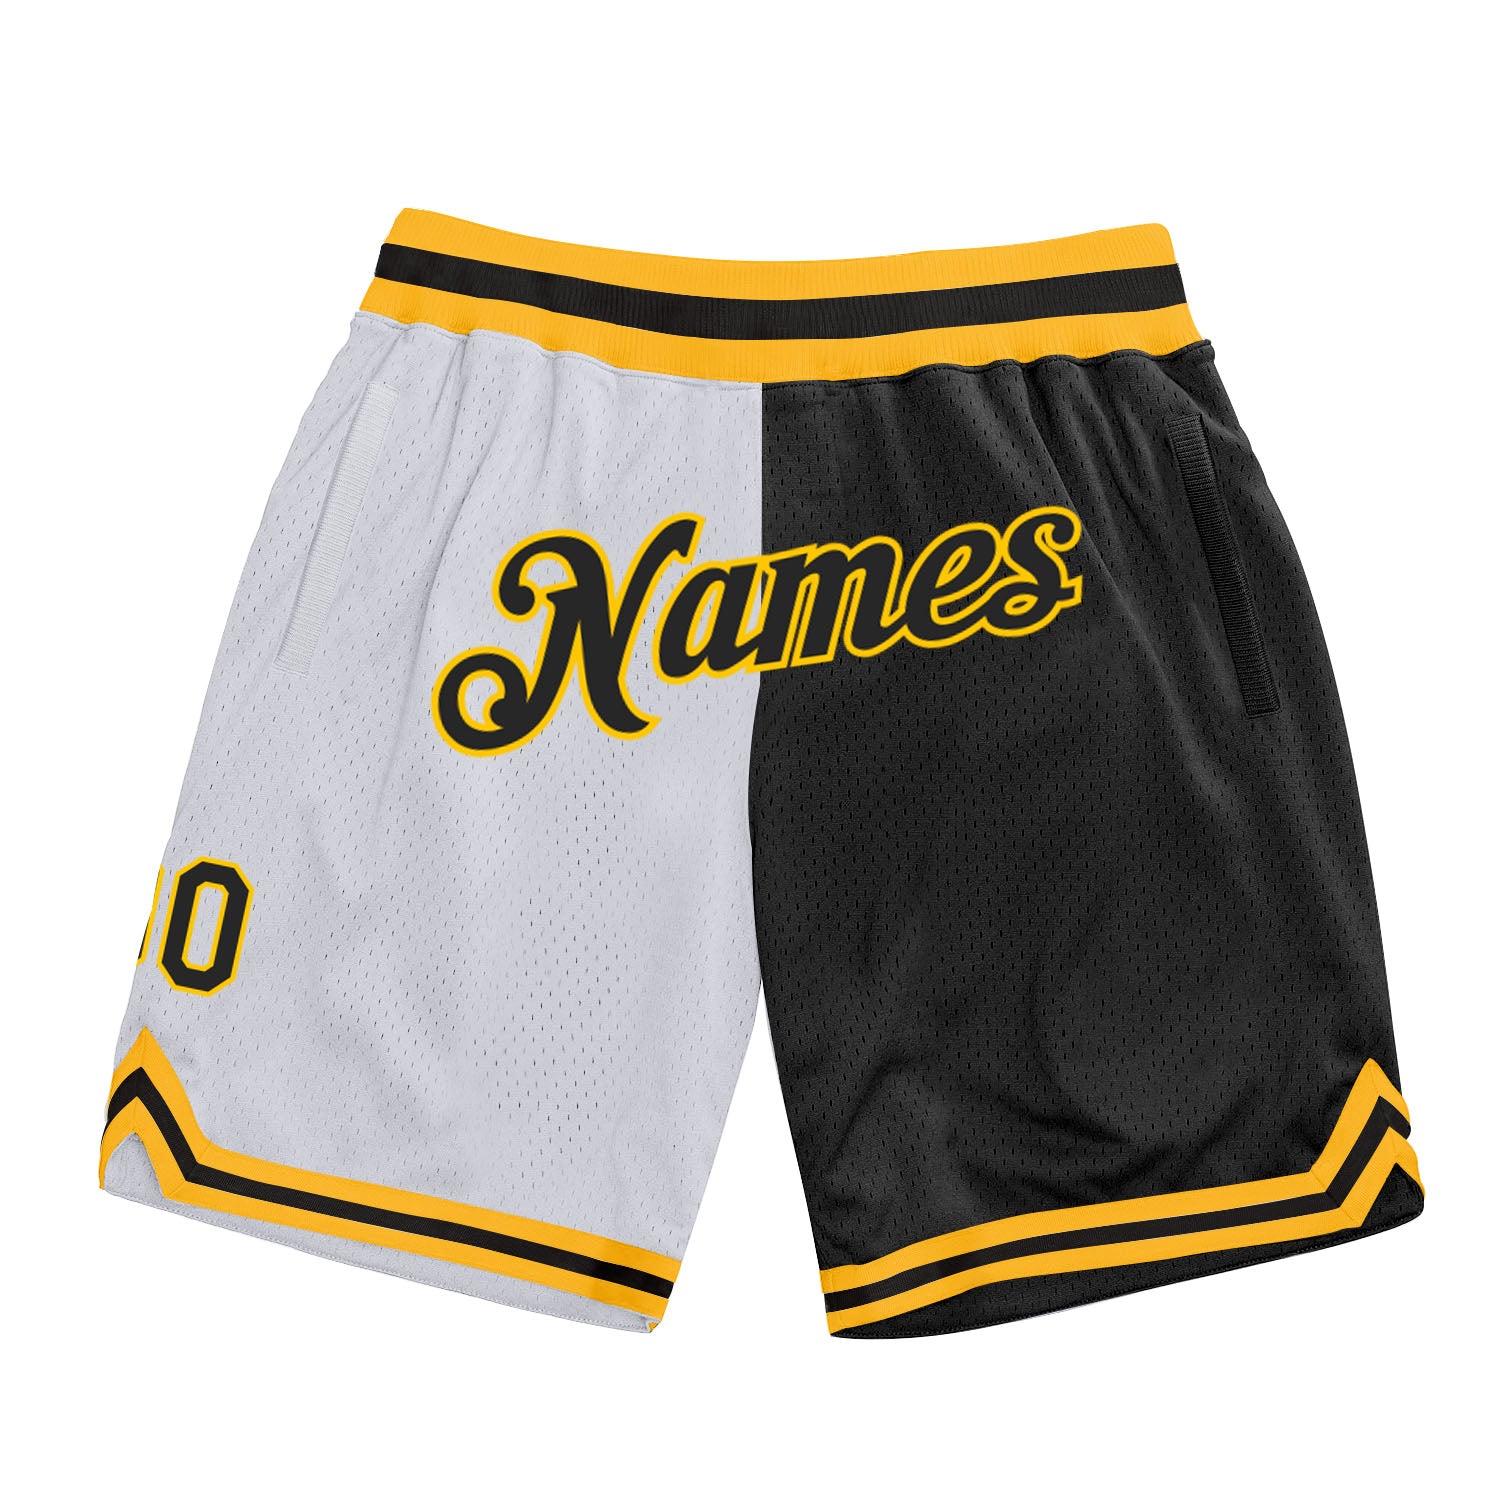 black and yellow lakers shorts